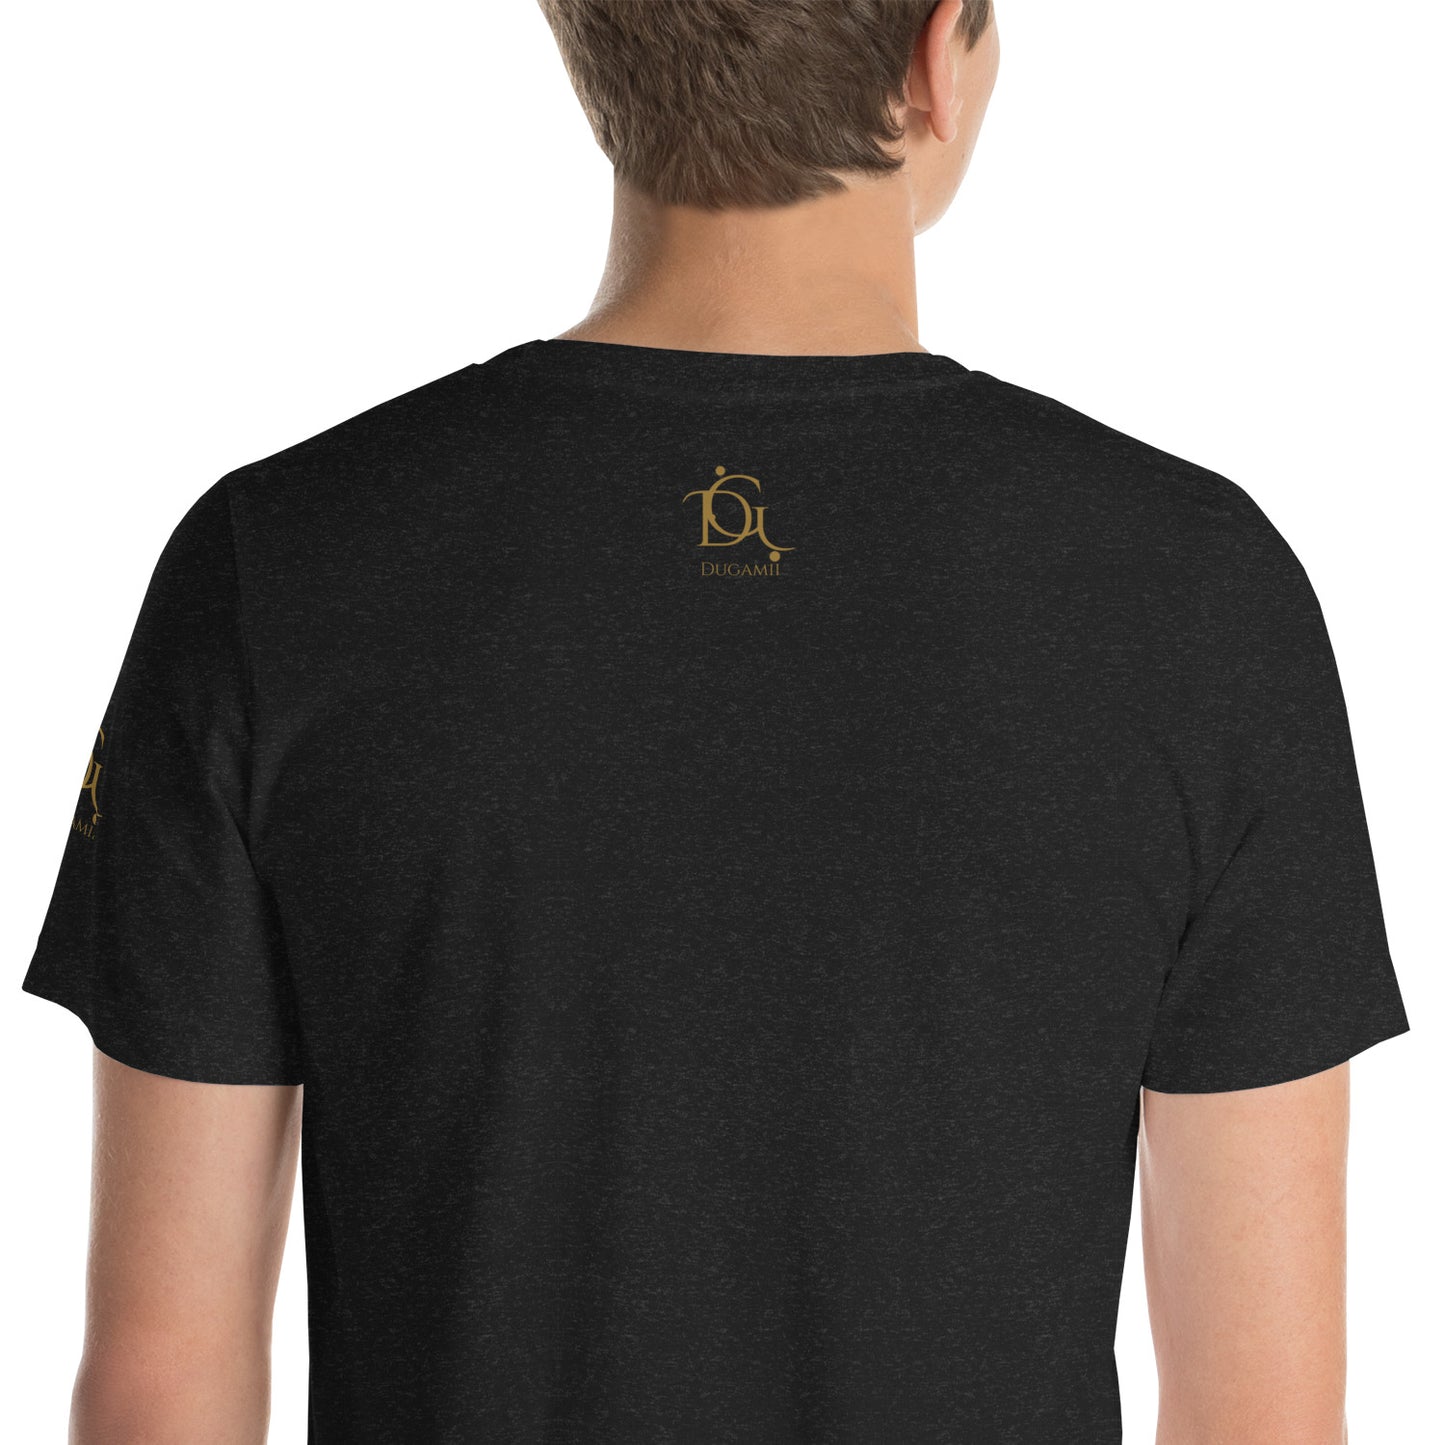 DuGamii Classic Throwback Unisex T-Shirt With Updated Logo